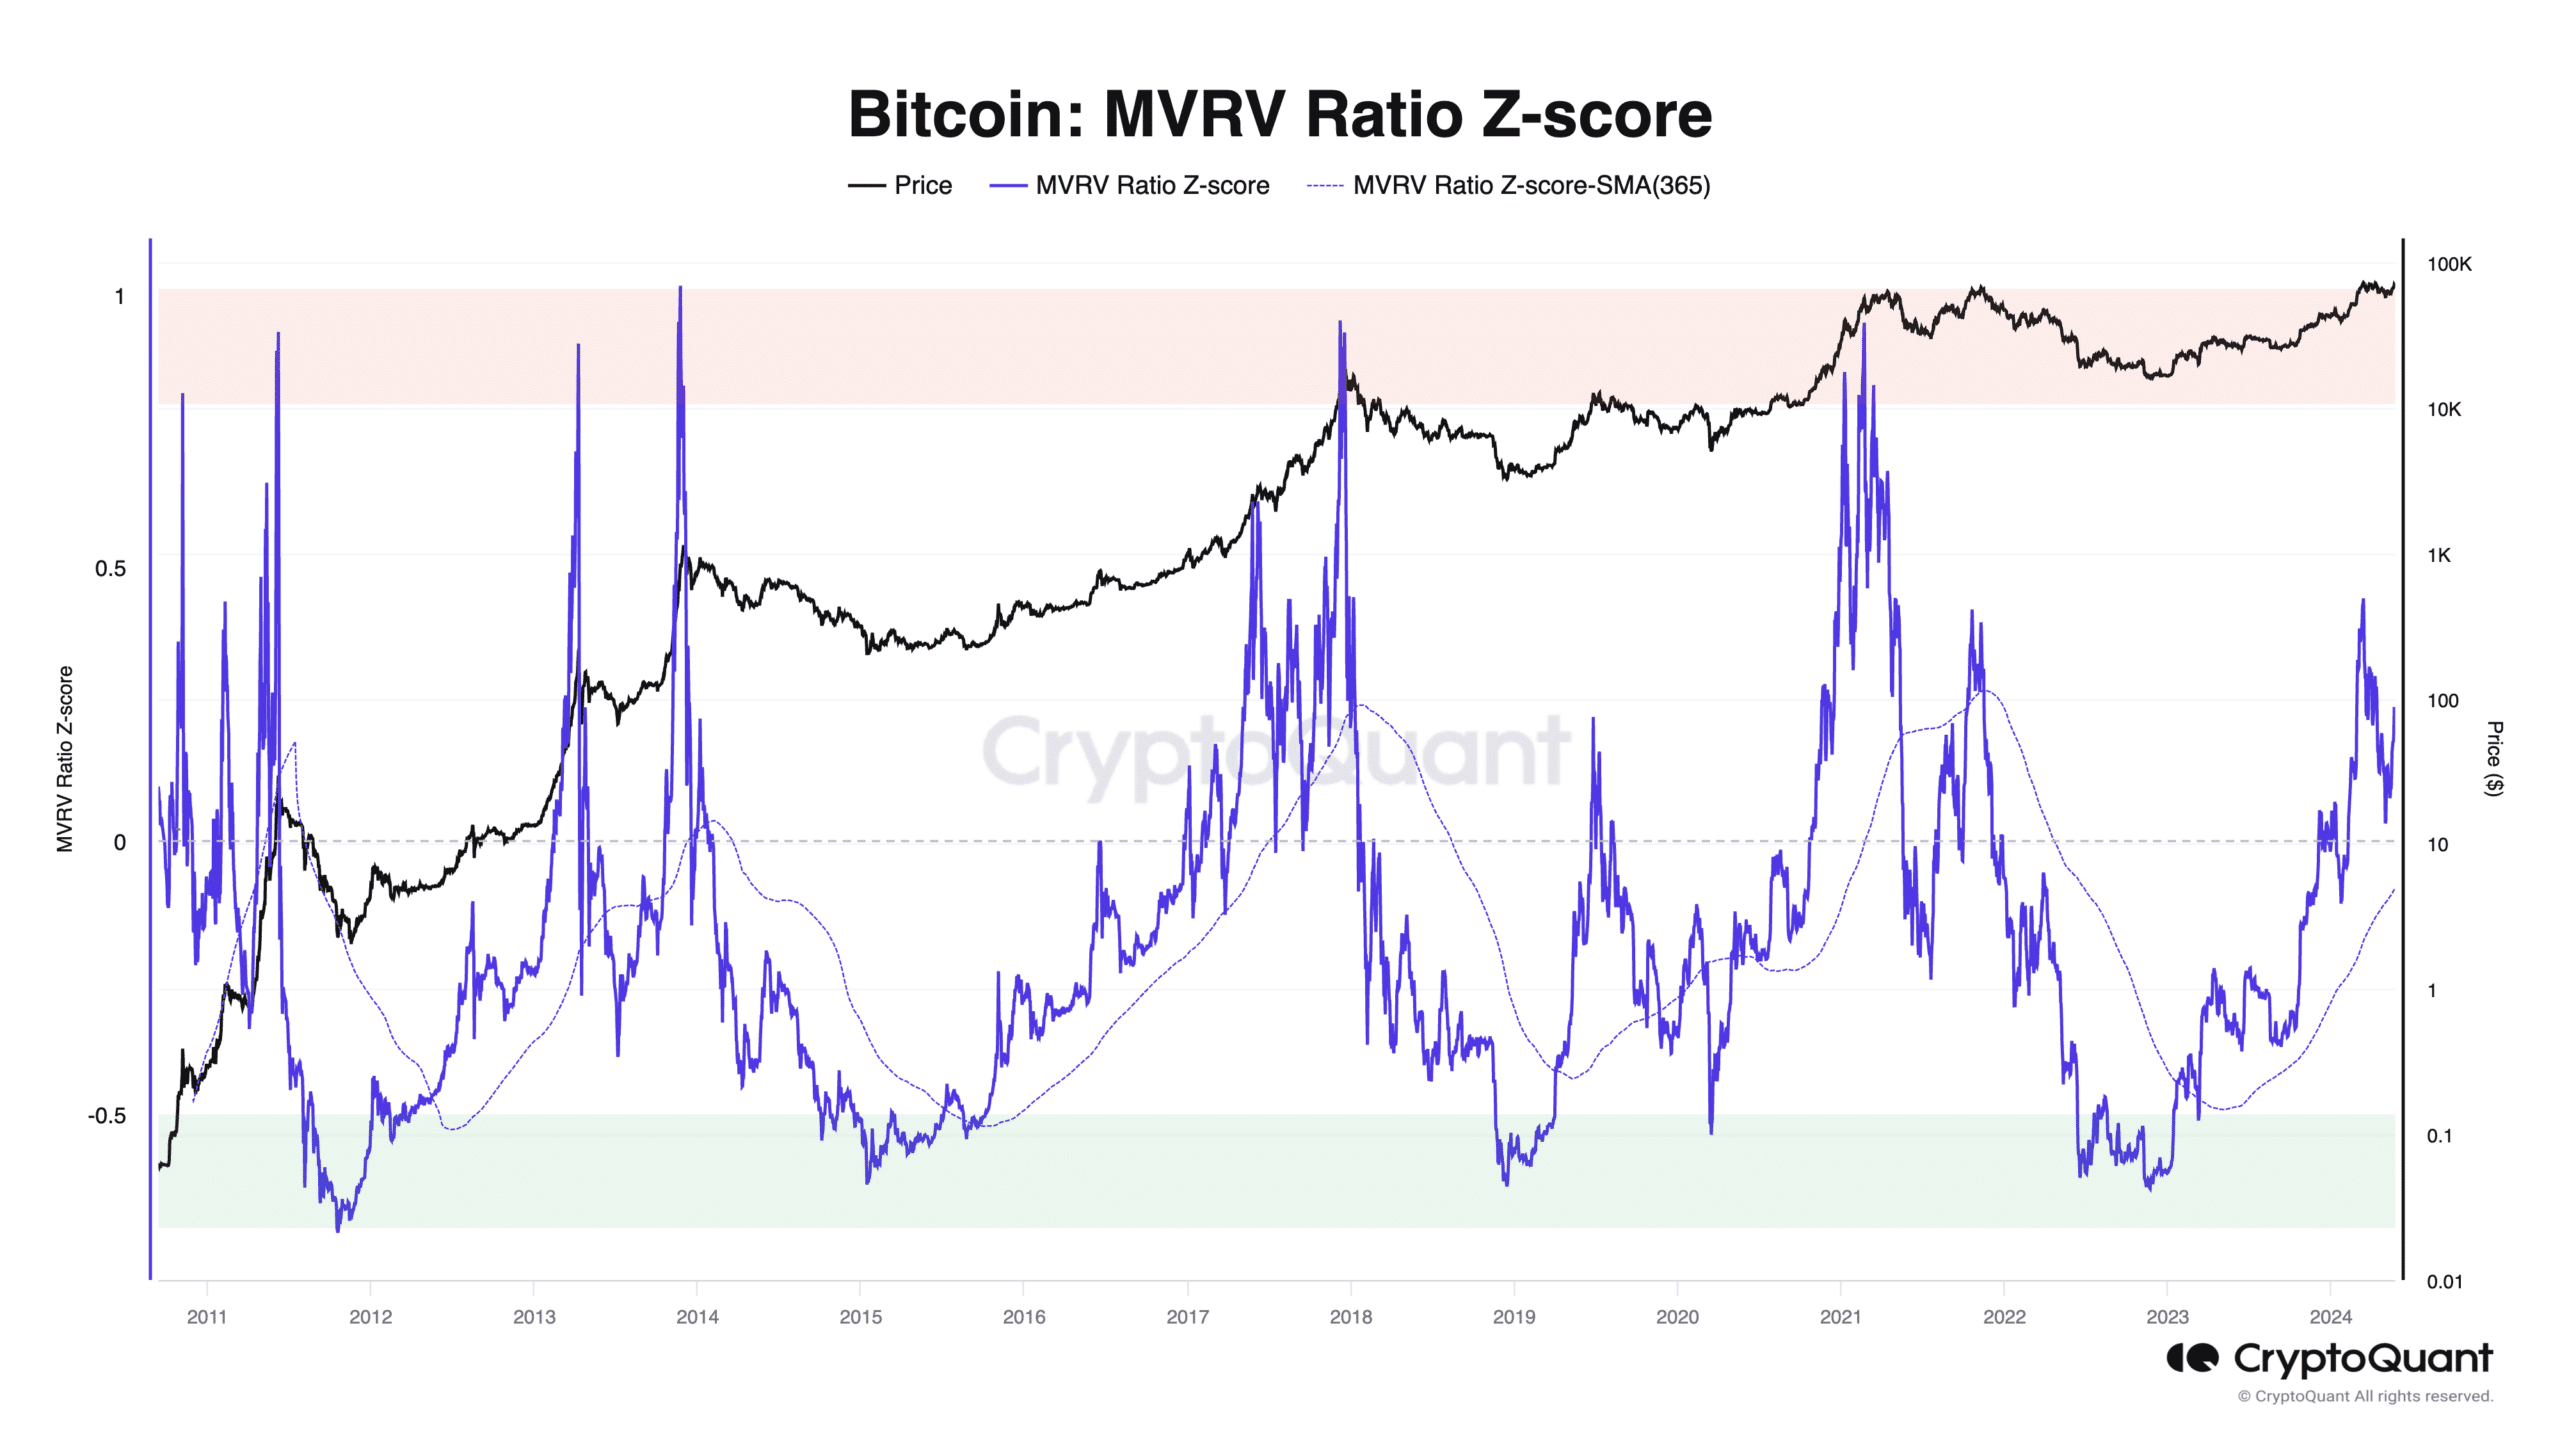 Bitcoin's MVRV ratio z-score chart